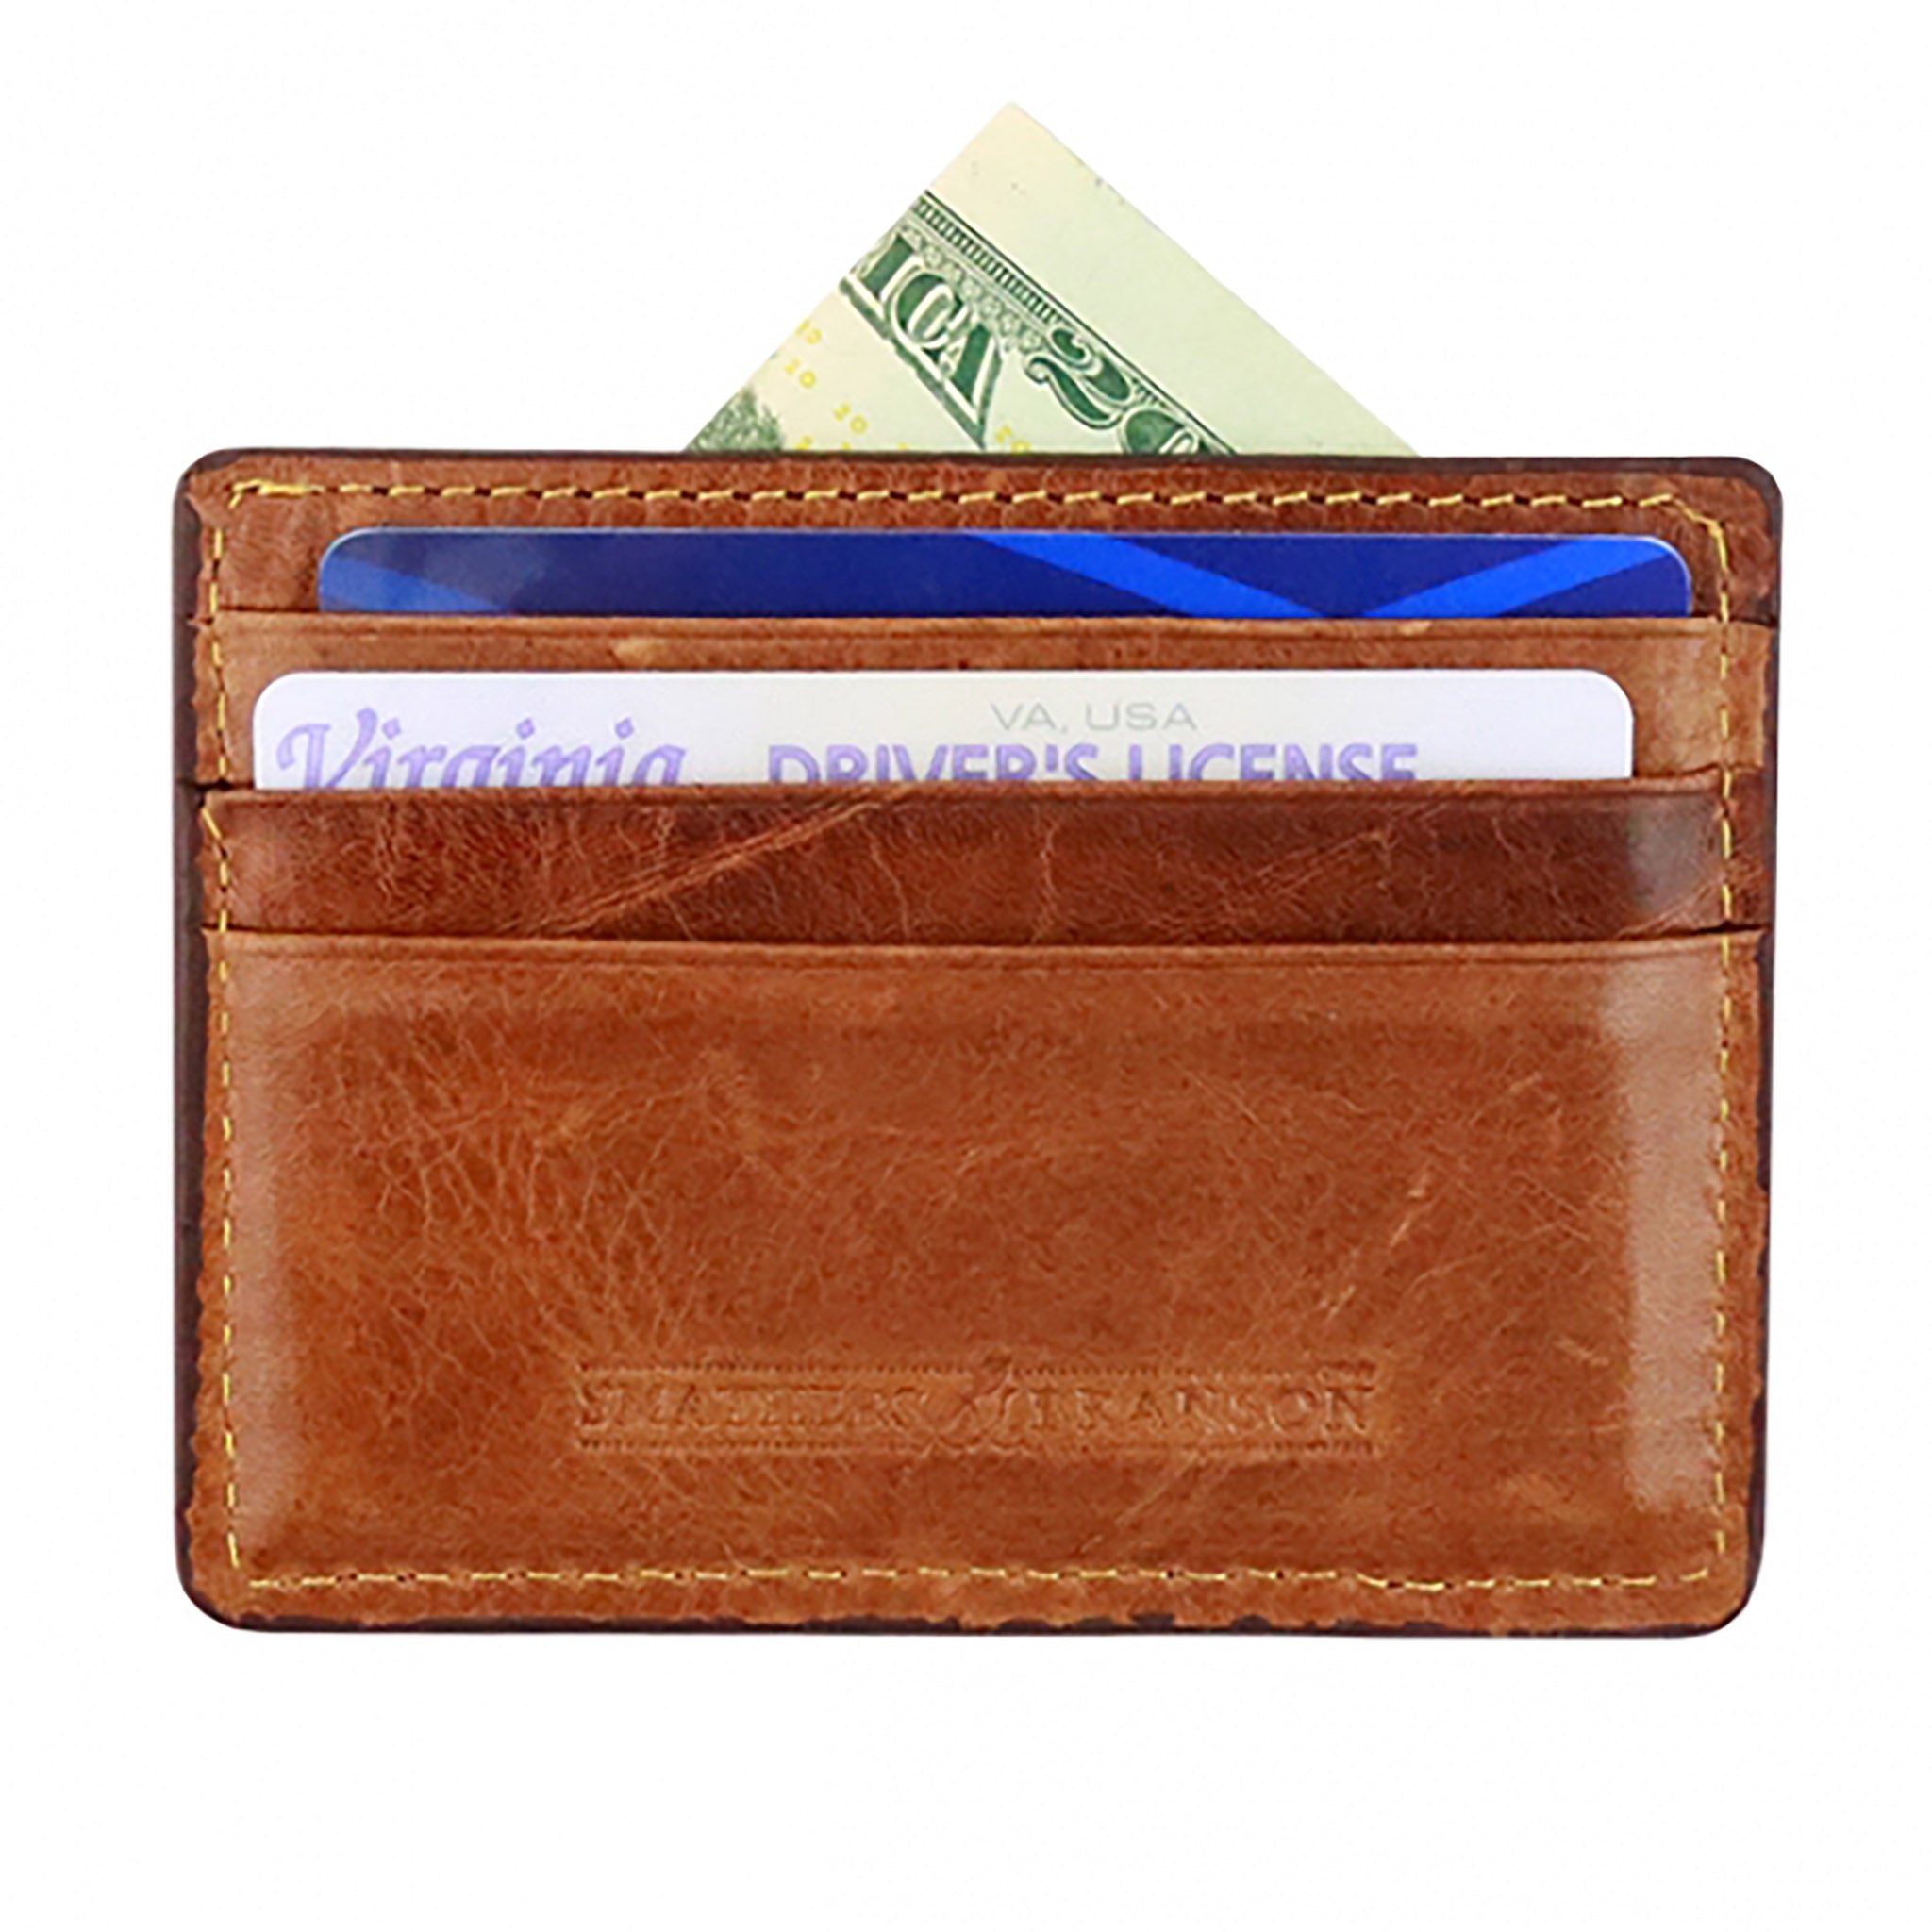 St. Louis Cardinals Front Pocket Leather Wallet